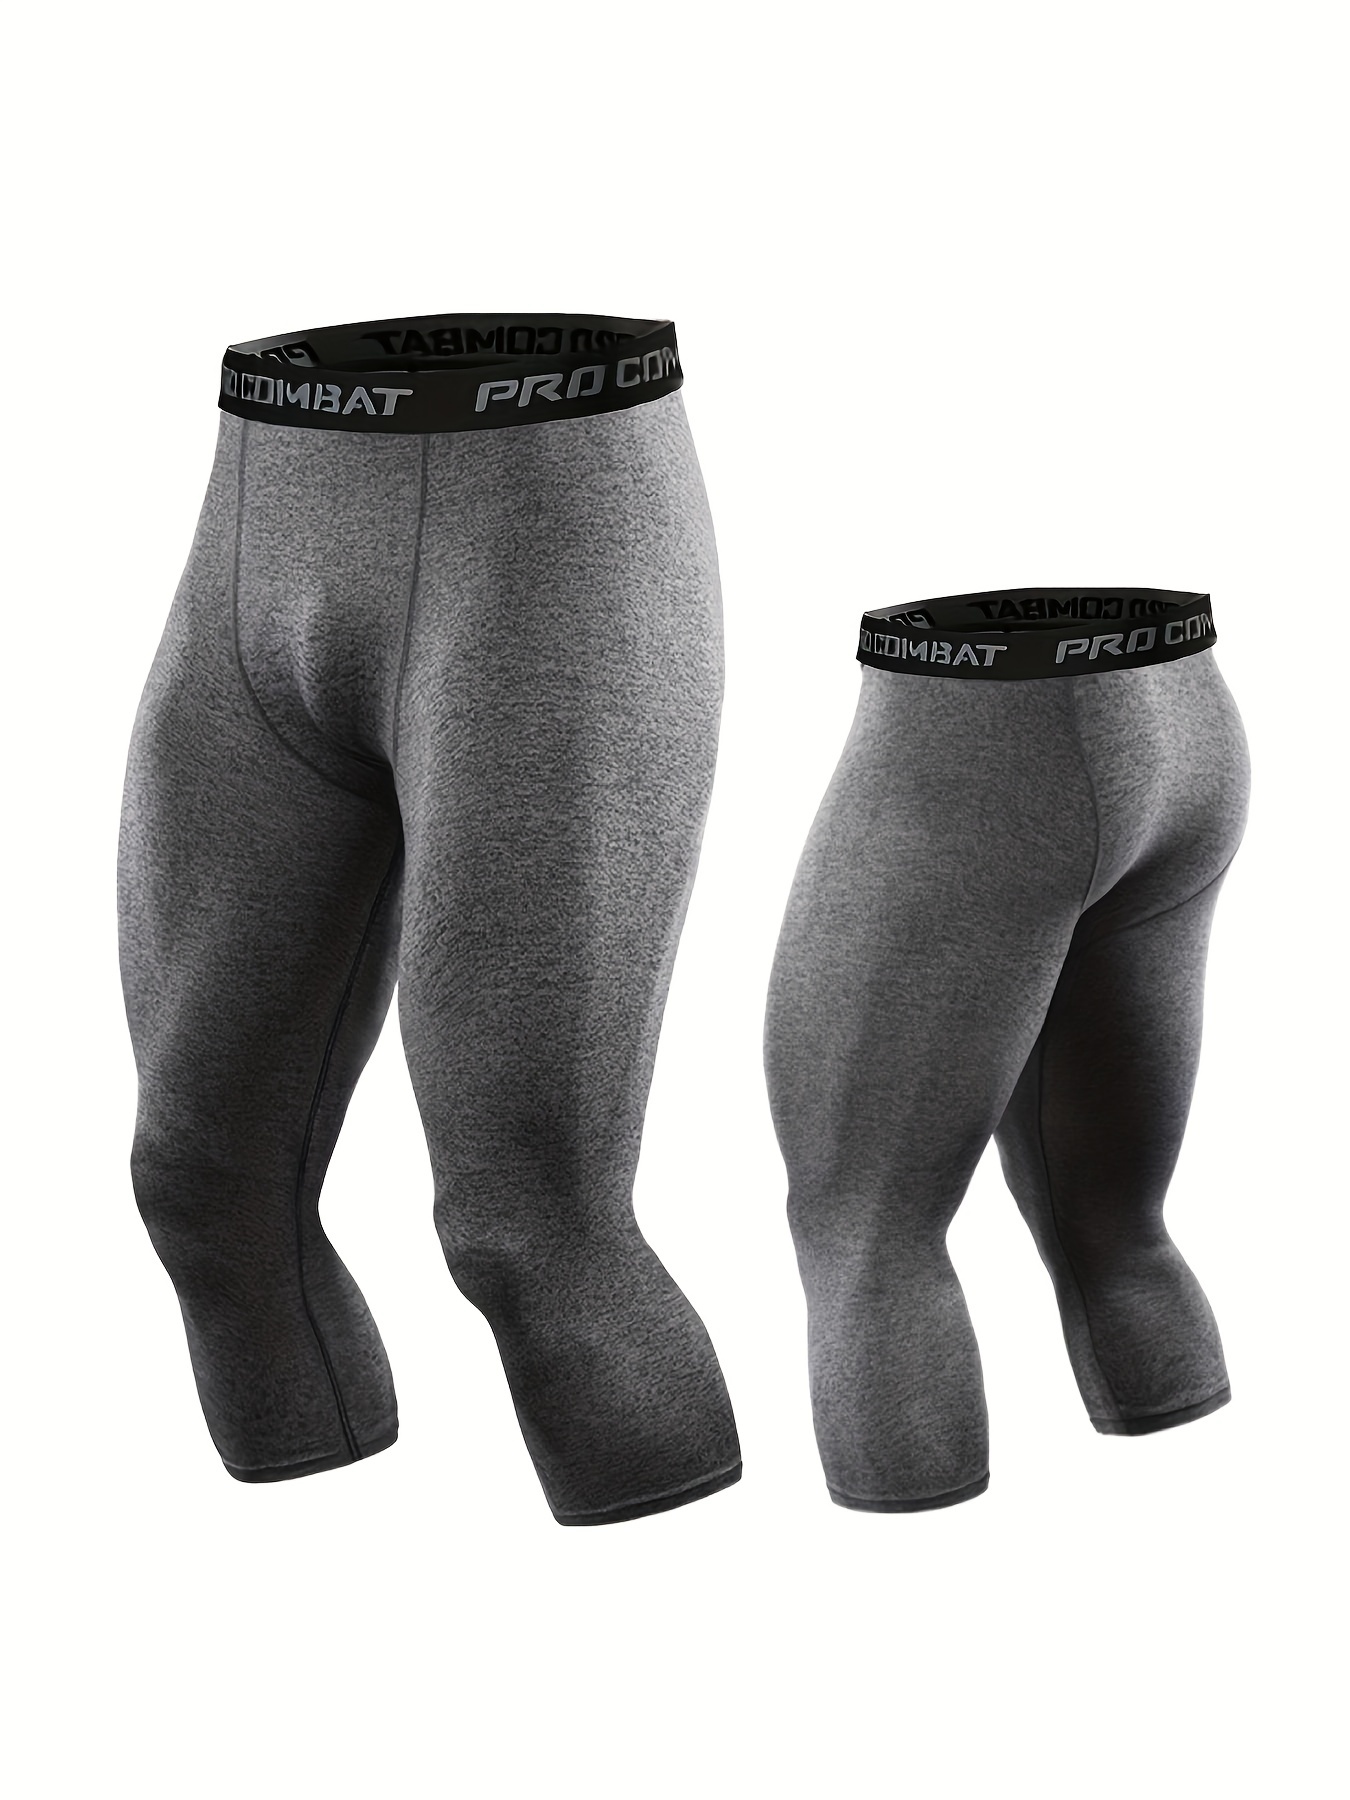 JUST RIDER Men's Compression Pants, Base Layer Workout Running Basketball  Sports Capri Leggings Tights 3/4